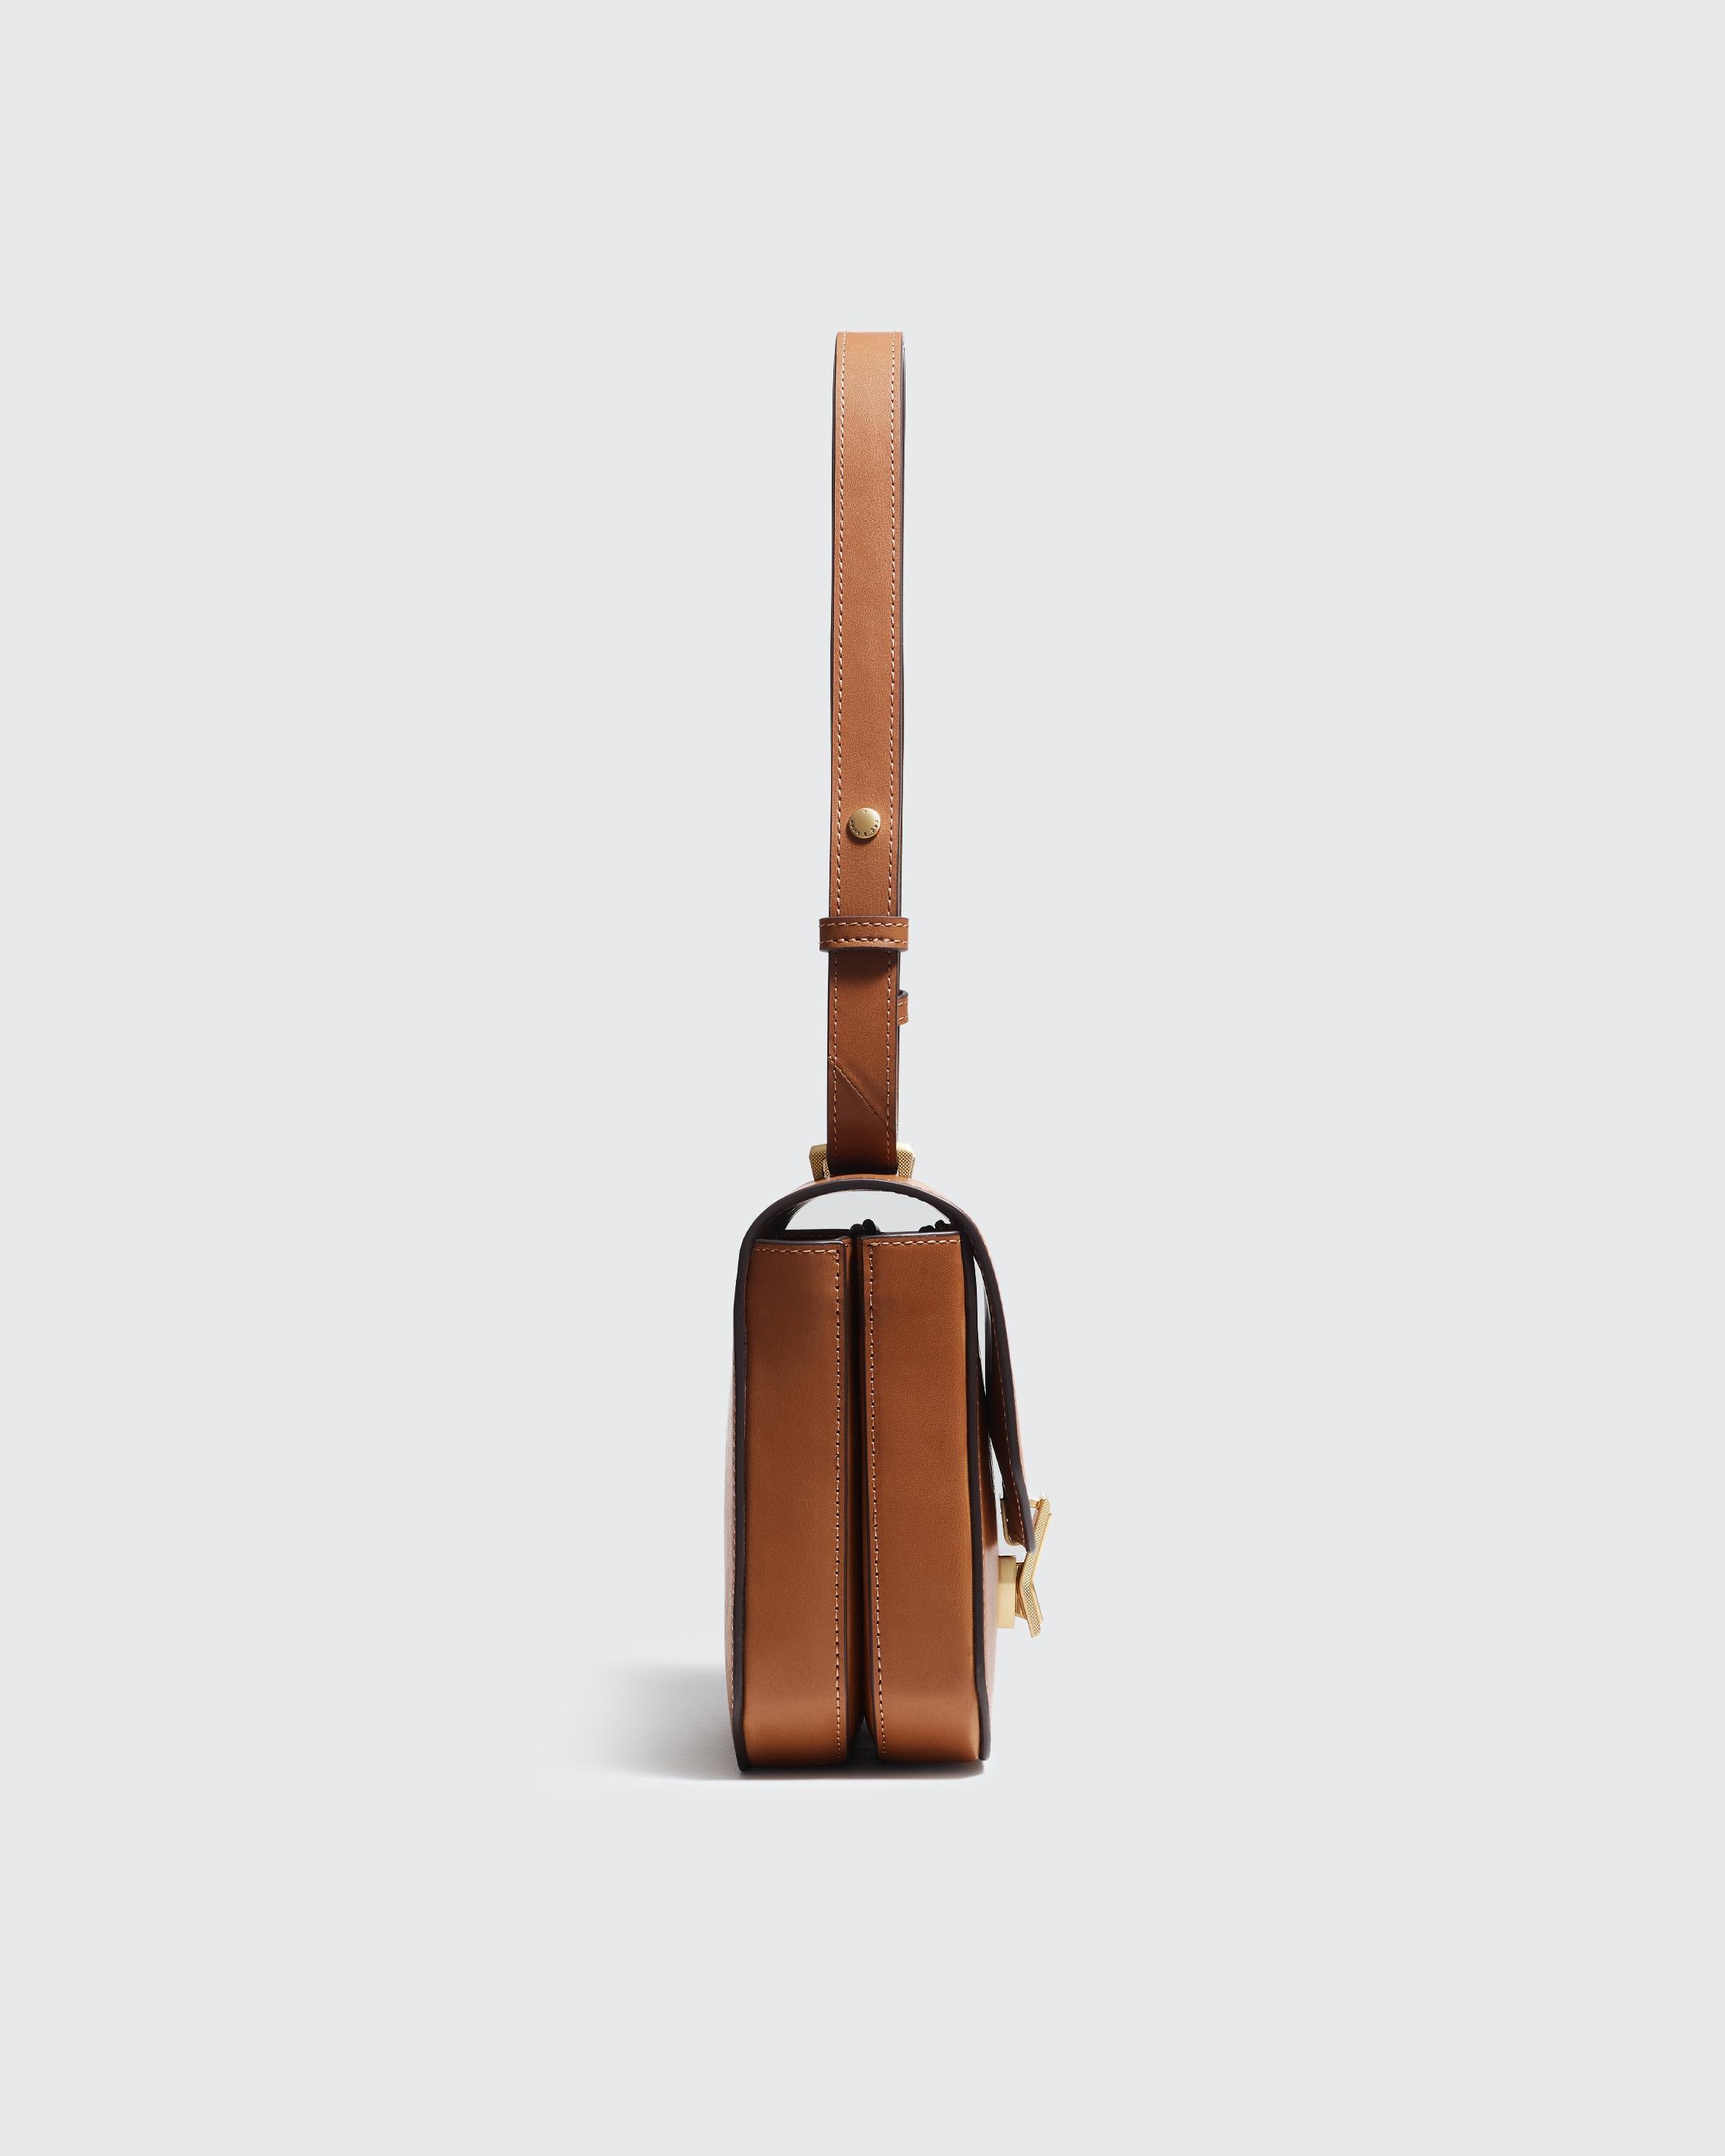 Max Crossbody - Leather
Medium Crossbody Bag - 5